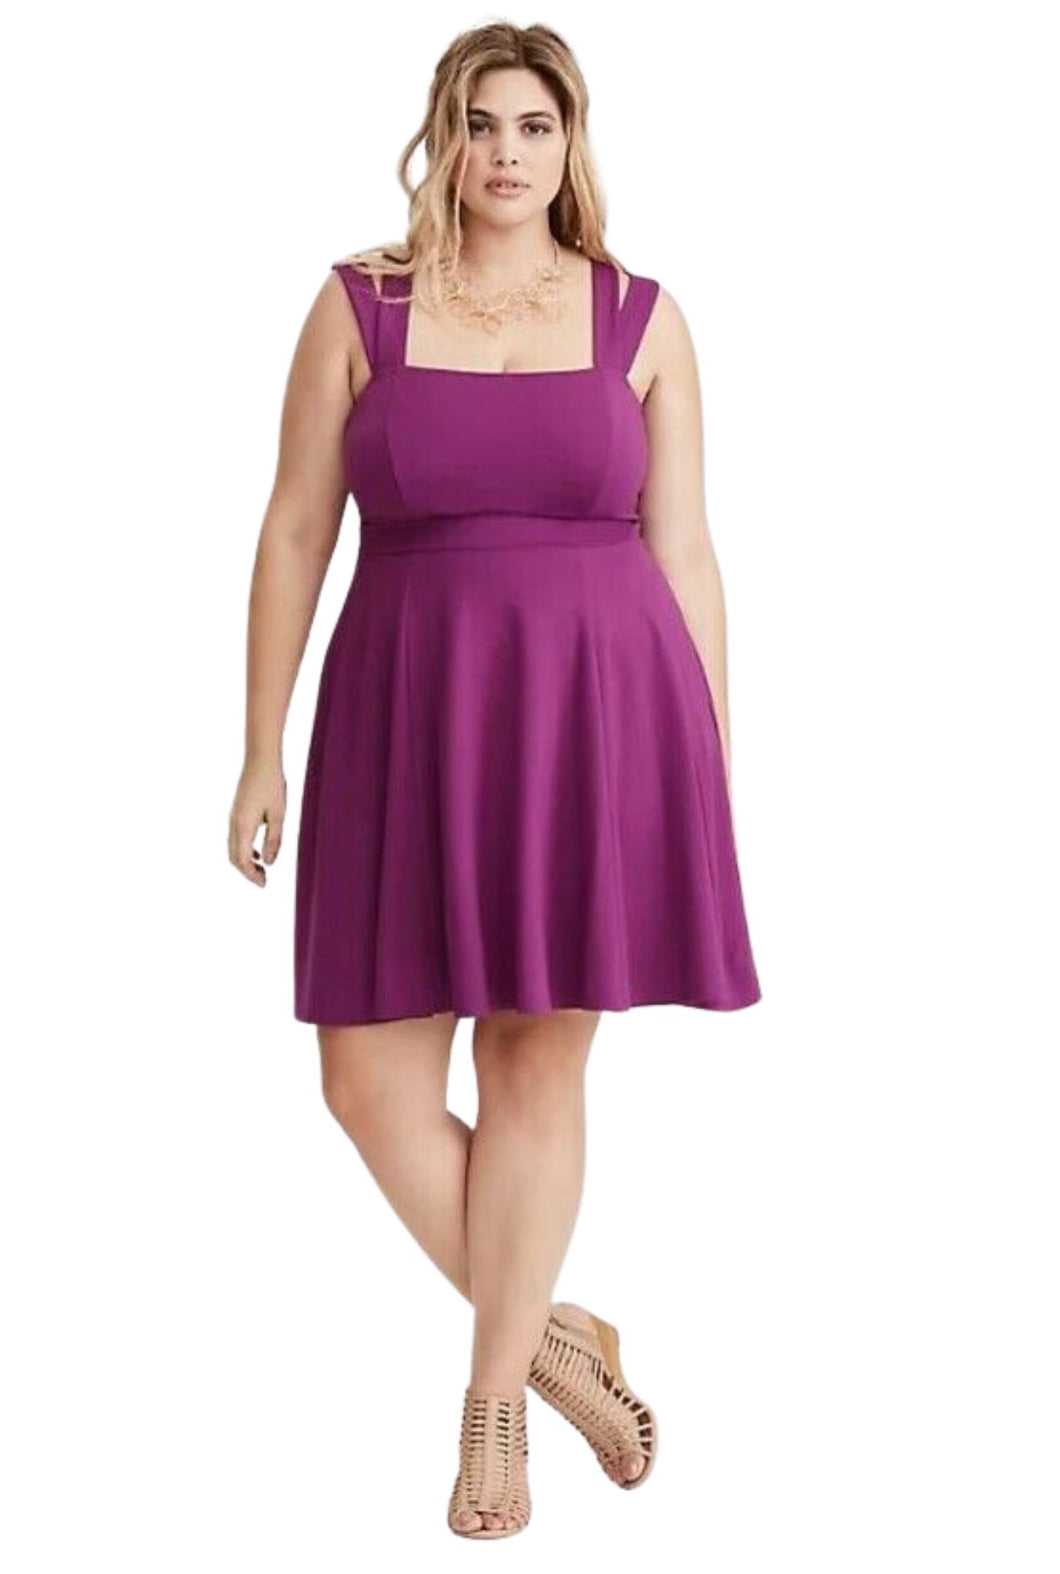 Torrid Purple Double Strap Skater Dress, Size 10